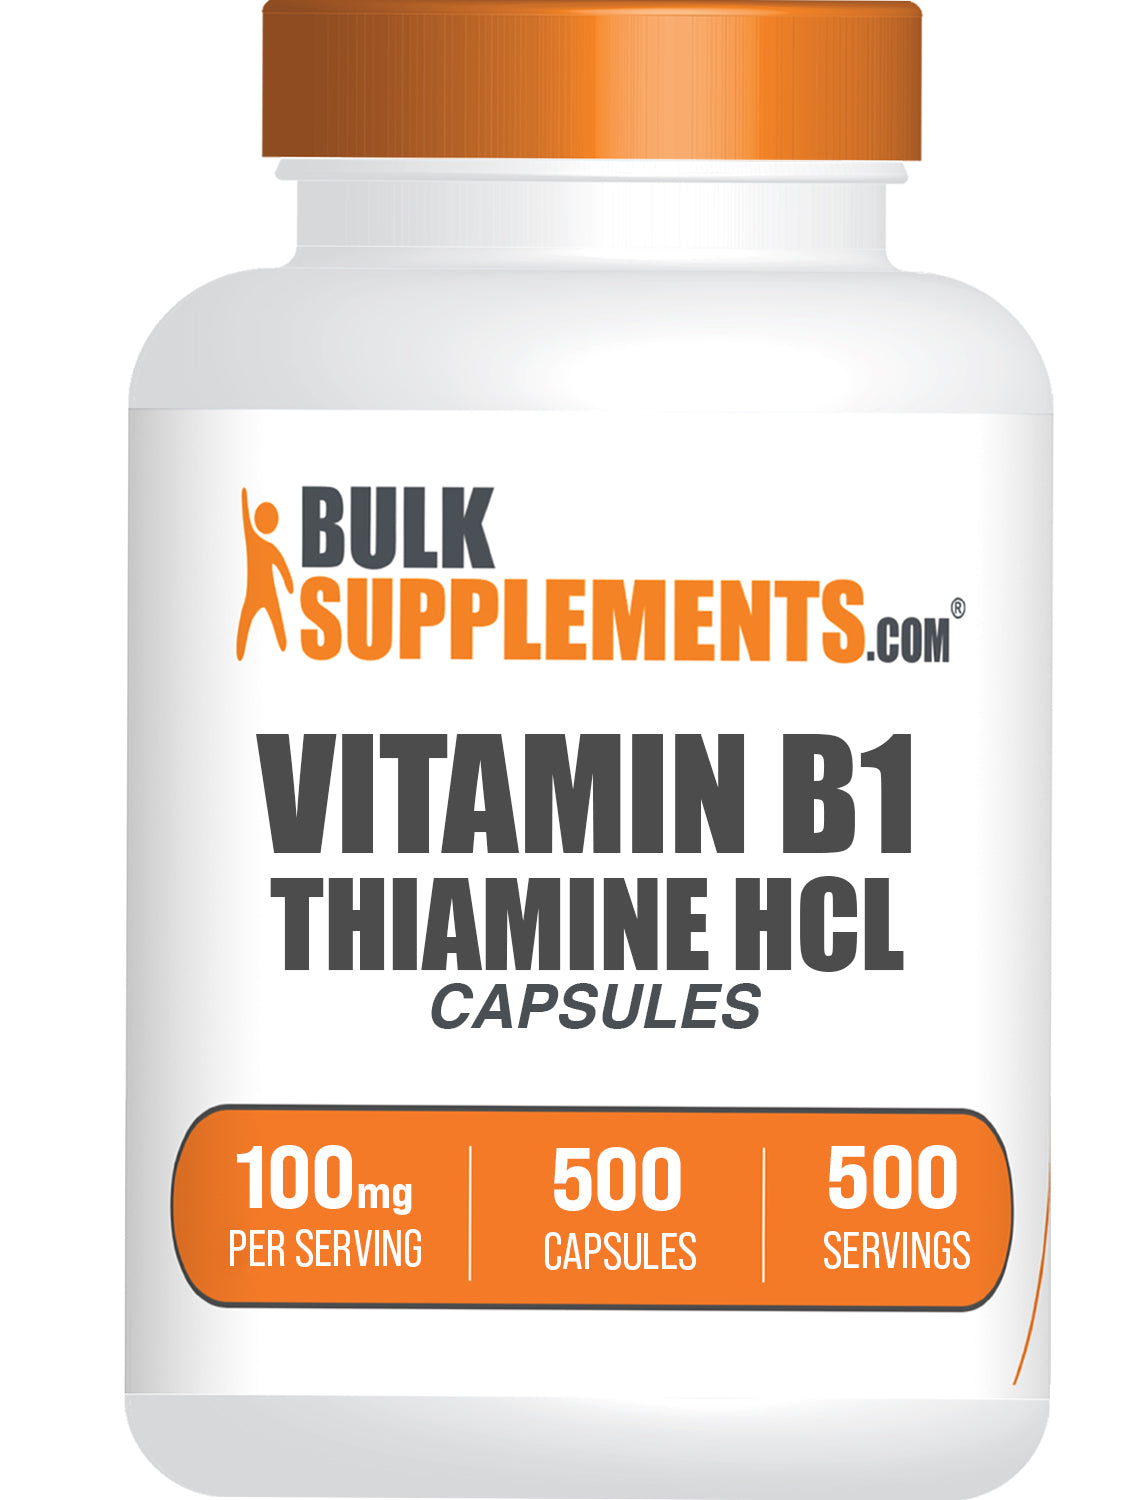 BulkSupplements.com Thiamine HCl (Vitamin B1) Capsules 500 ct bottle image